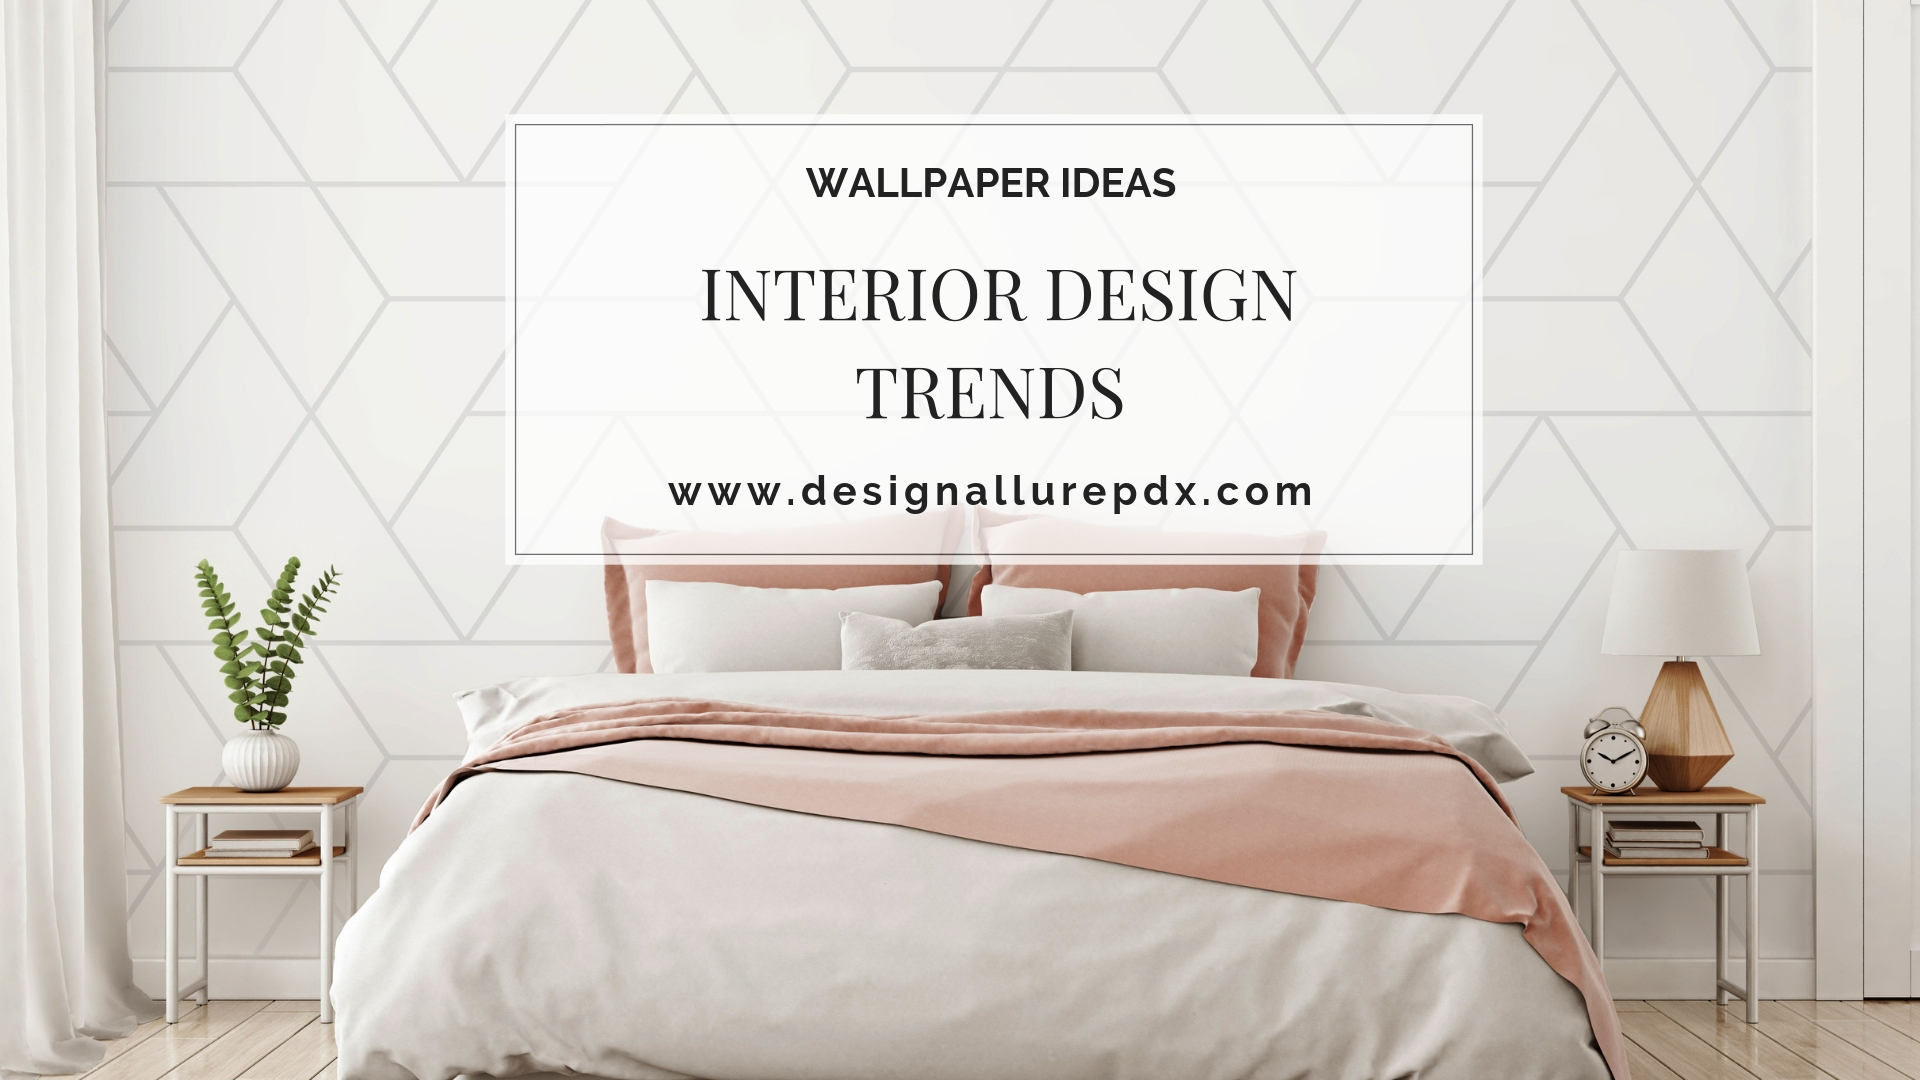 Free Download Interior Design Trends 2019 5 Top Wallpaper